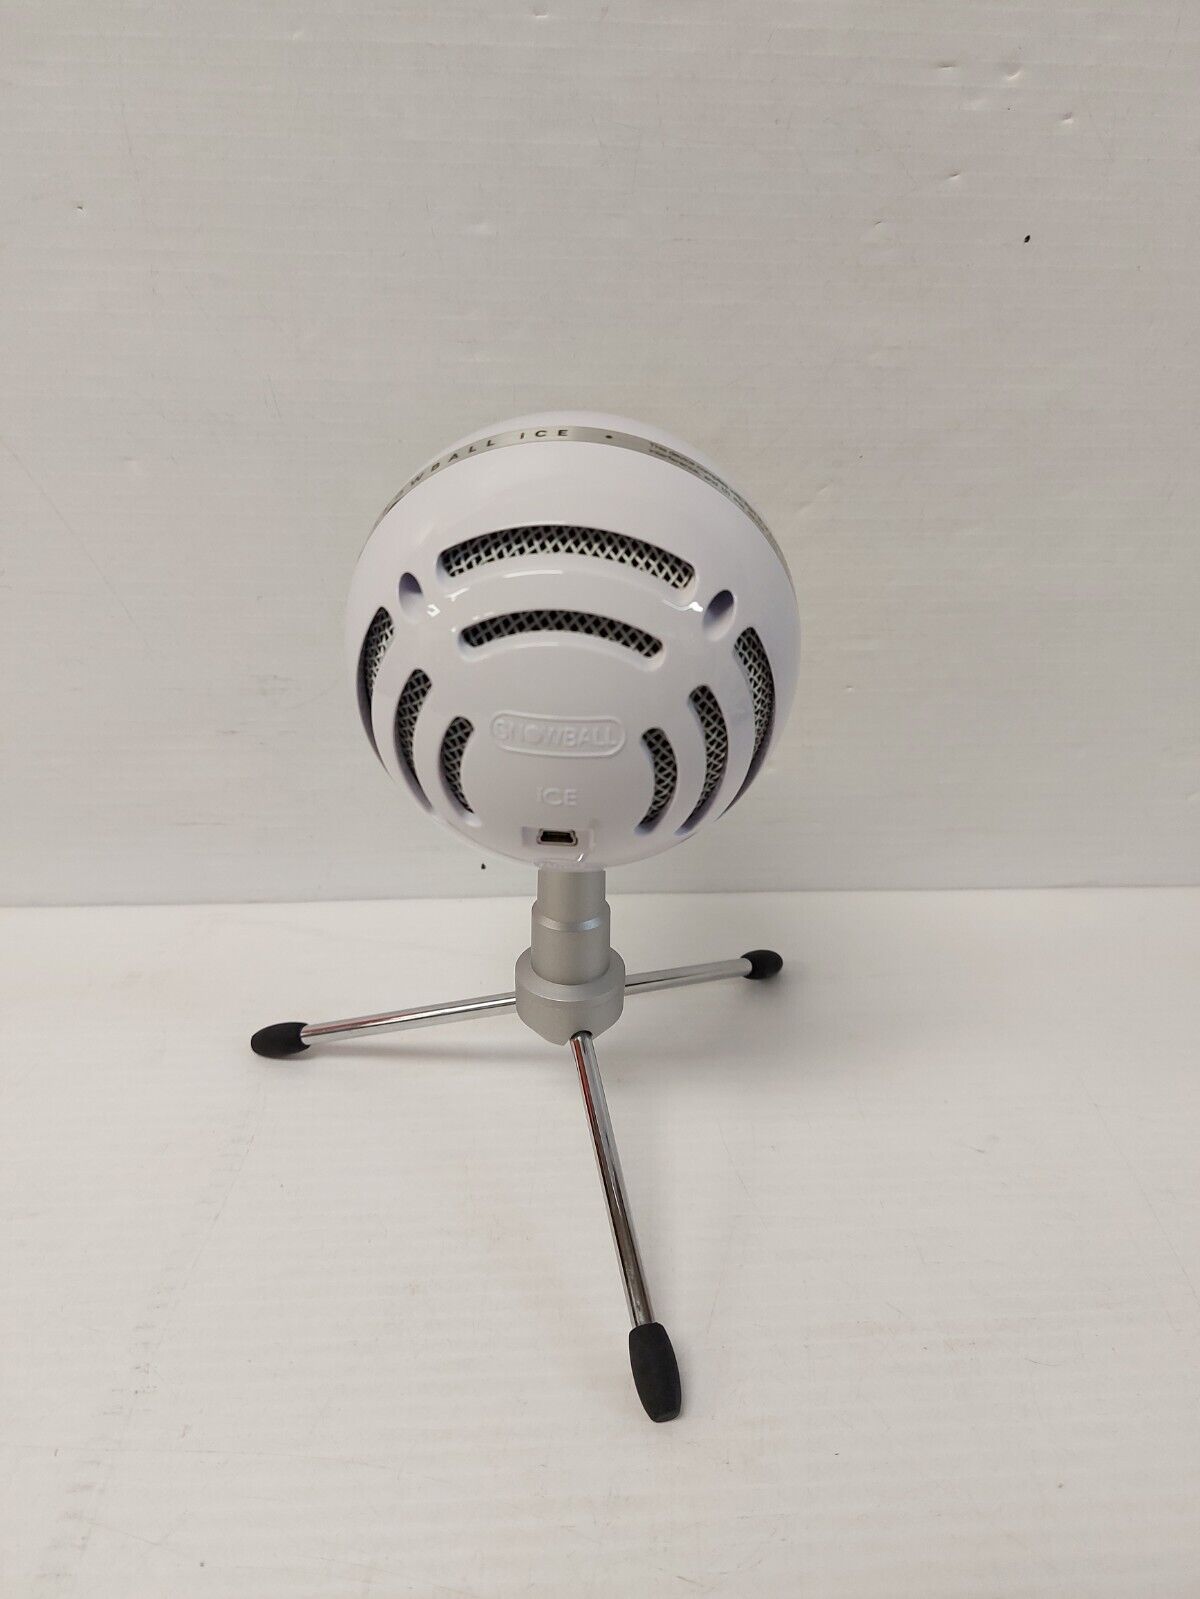 (N81525-7) Blue A00122 Snowball Microphone w/ USB and Tripod